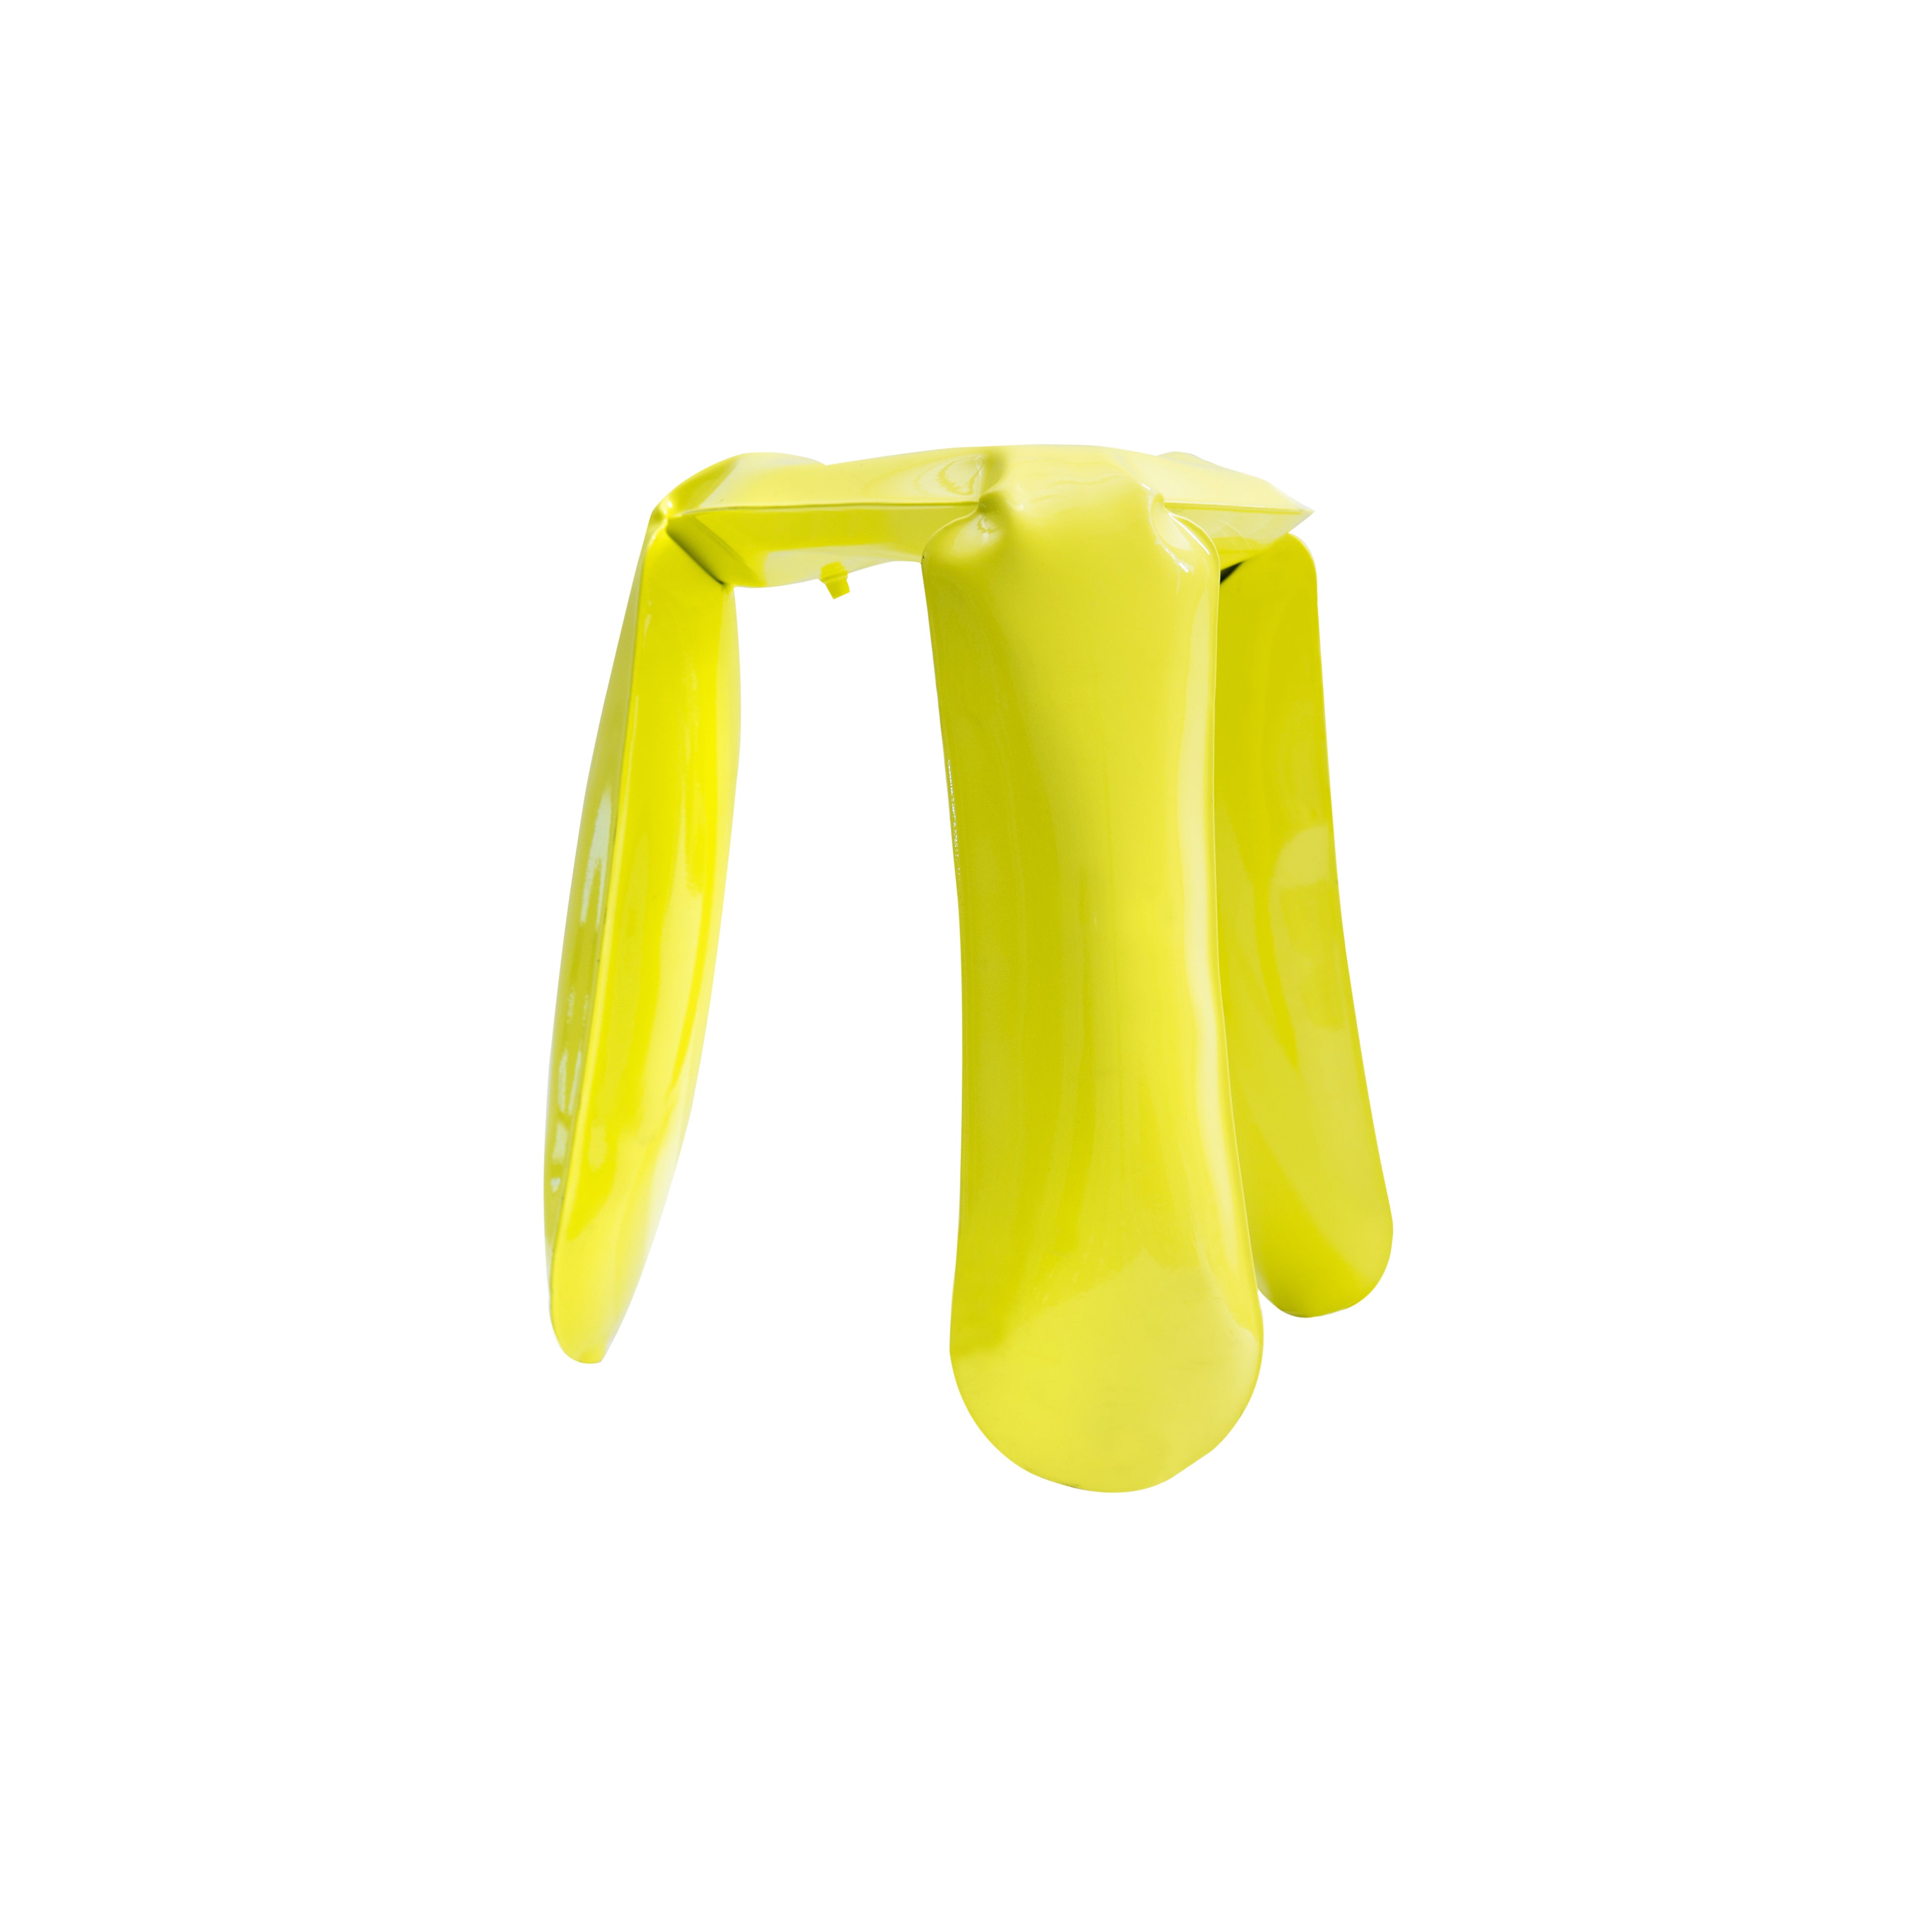 Plopp Metal Mini Footstool: Yellow Glossy Carbon Steel